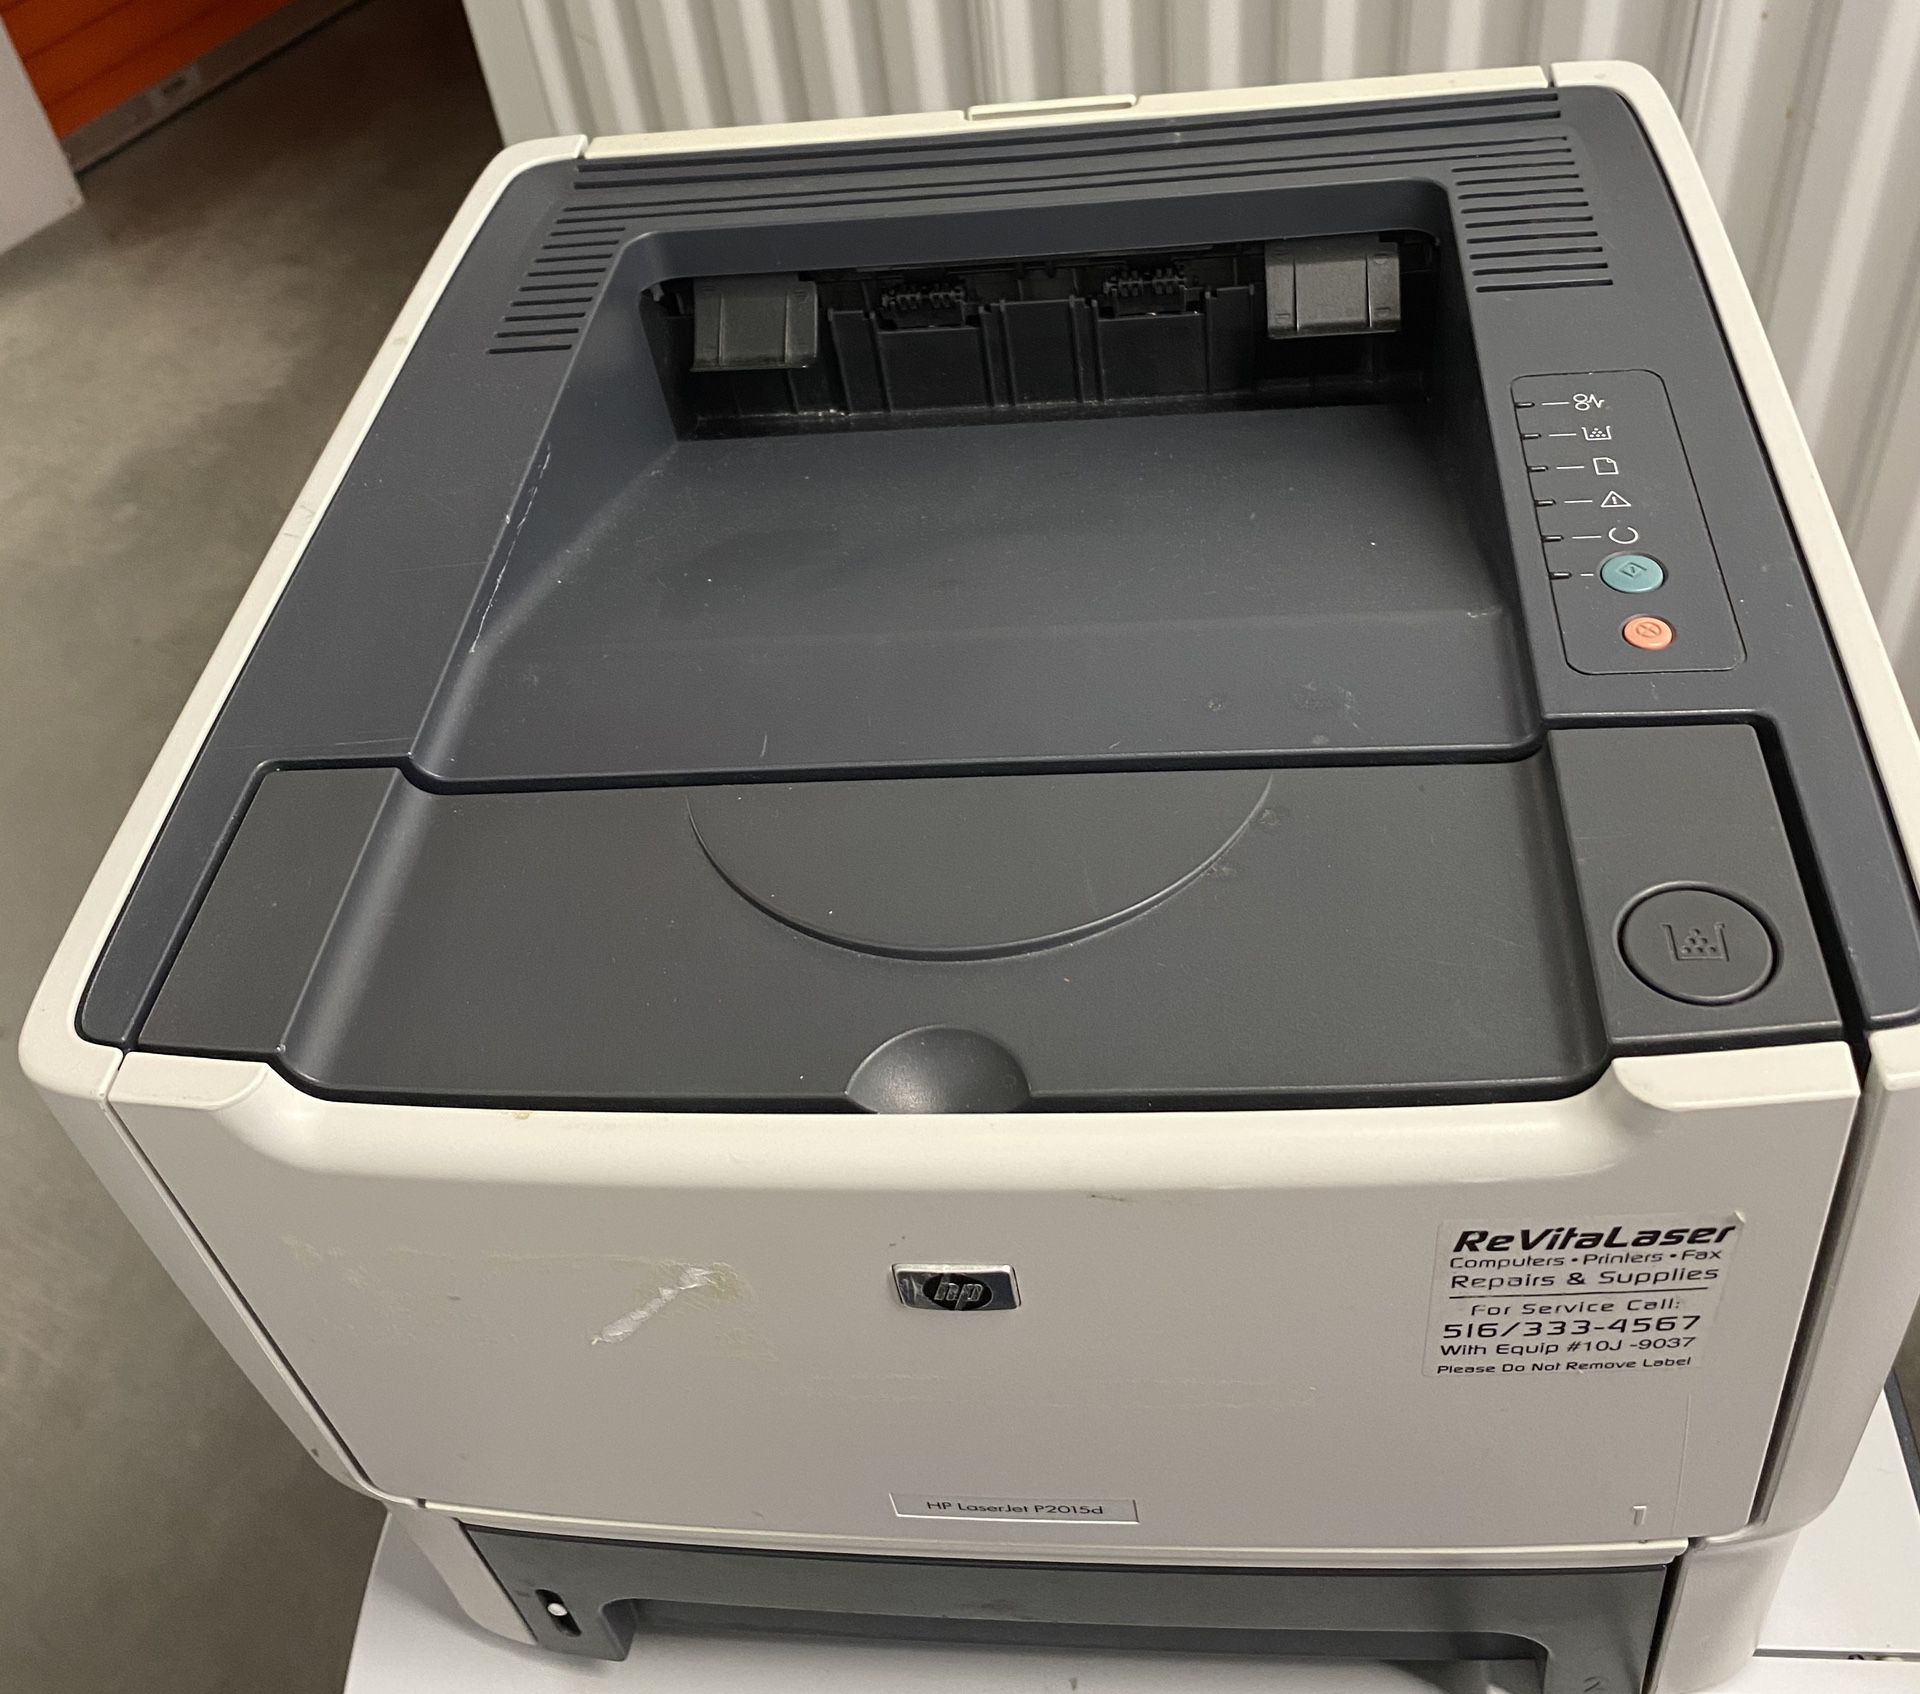 Hp LaserJet printer